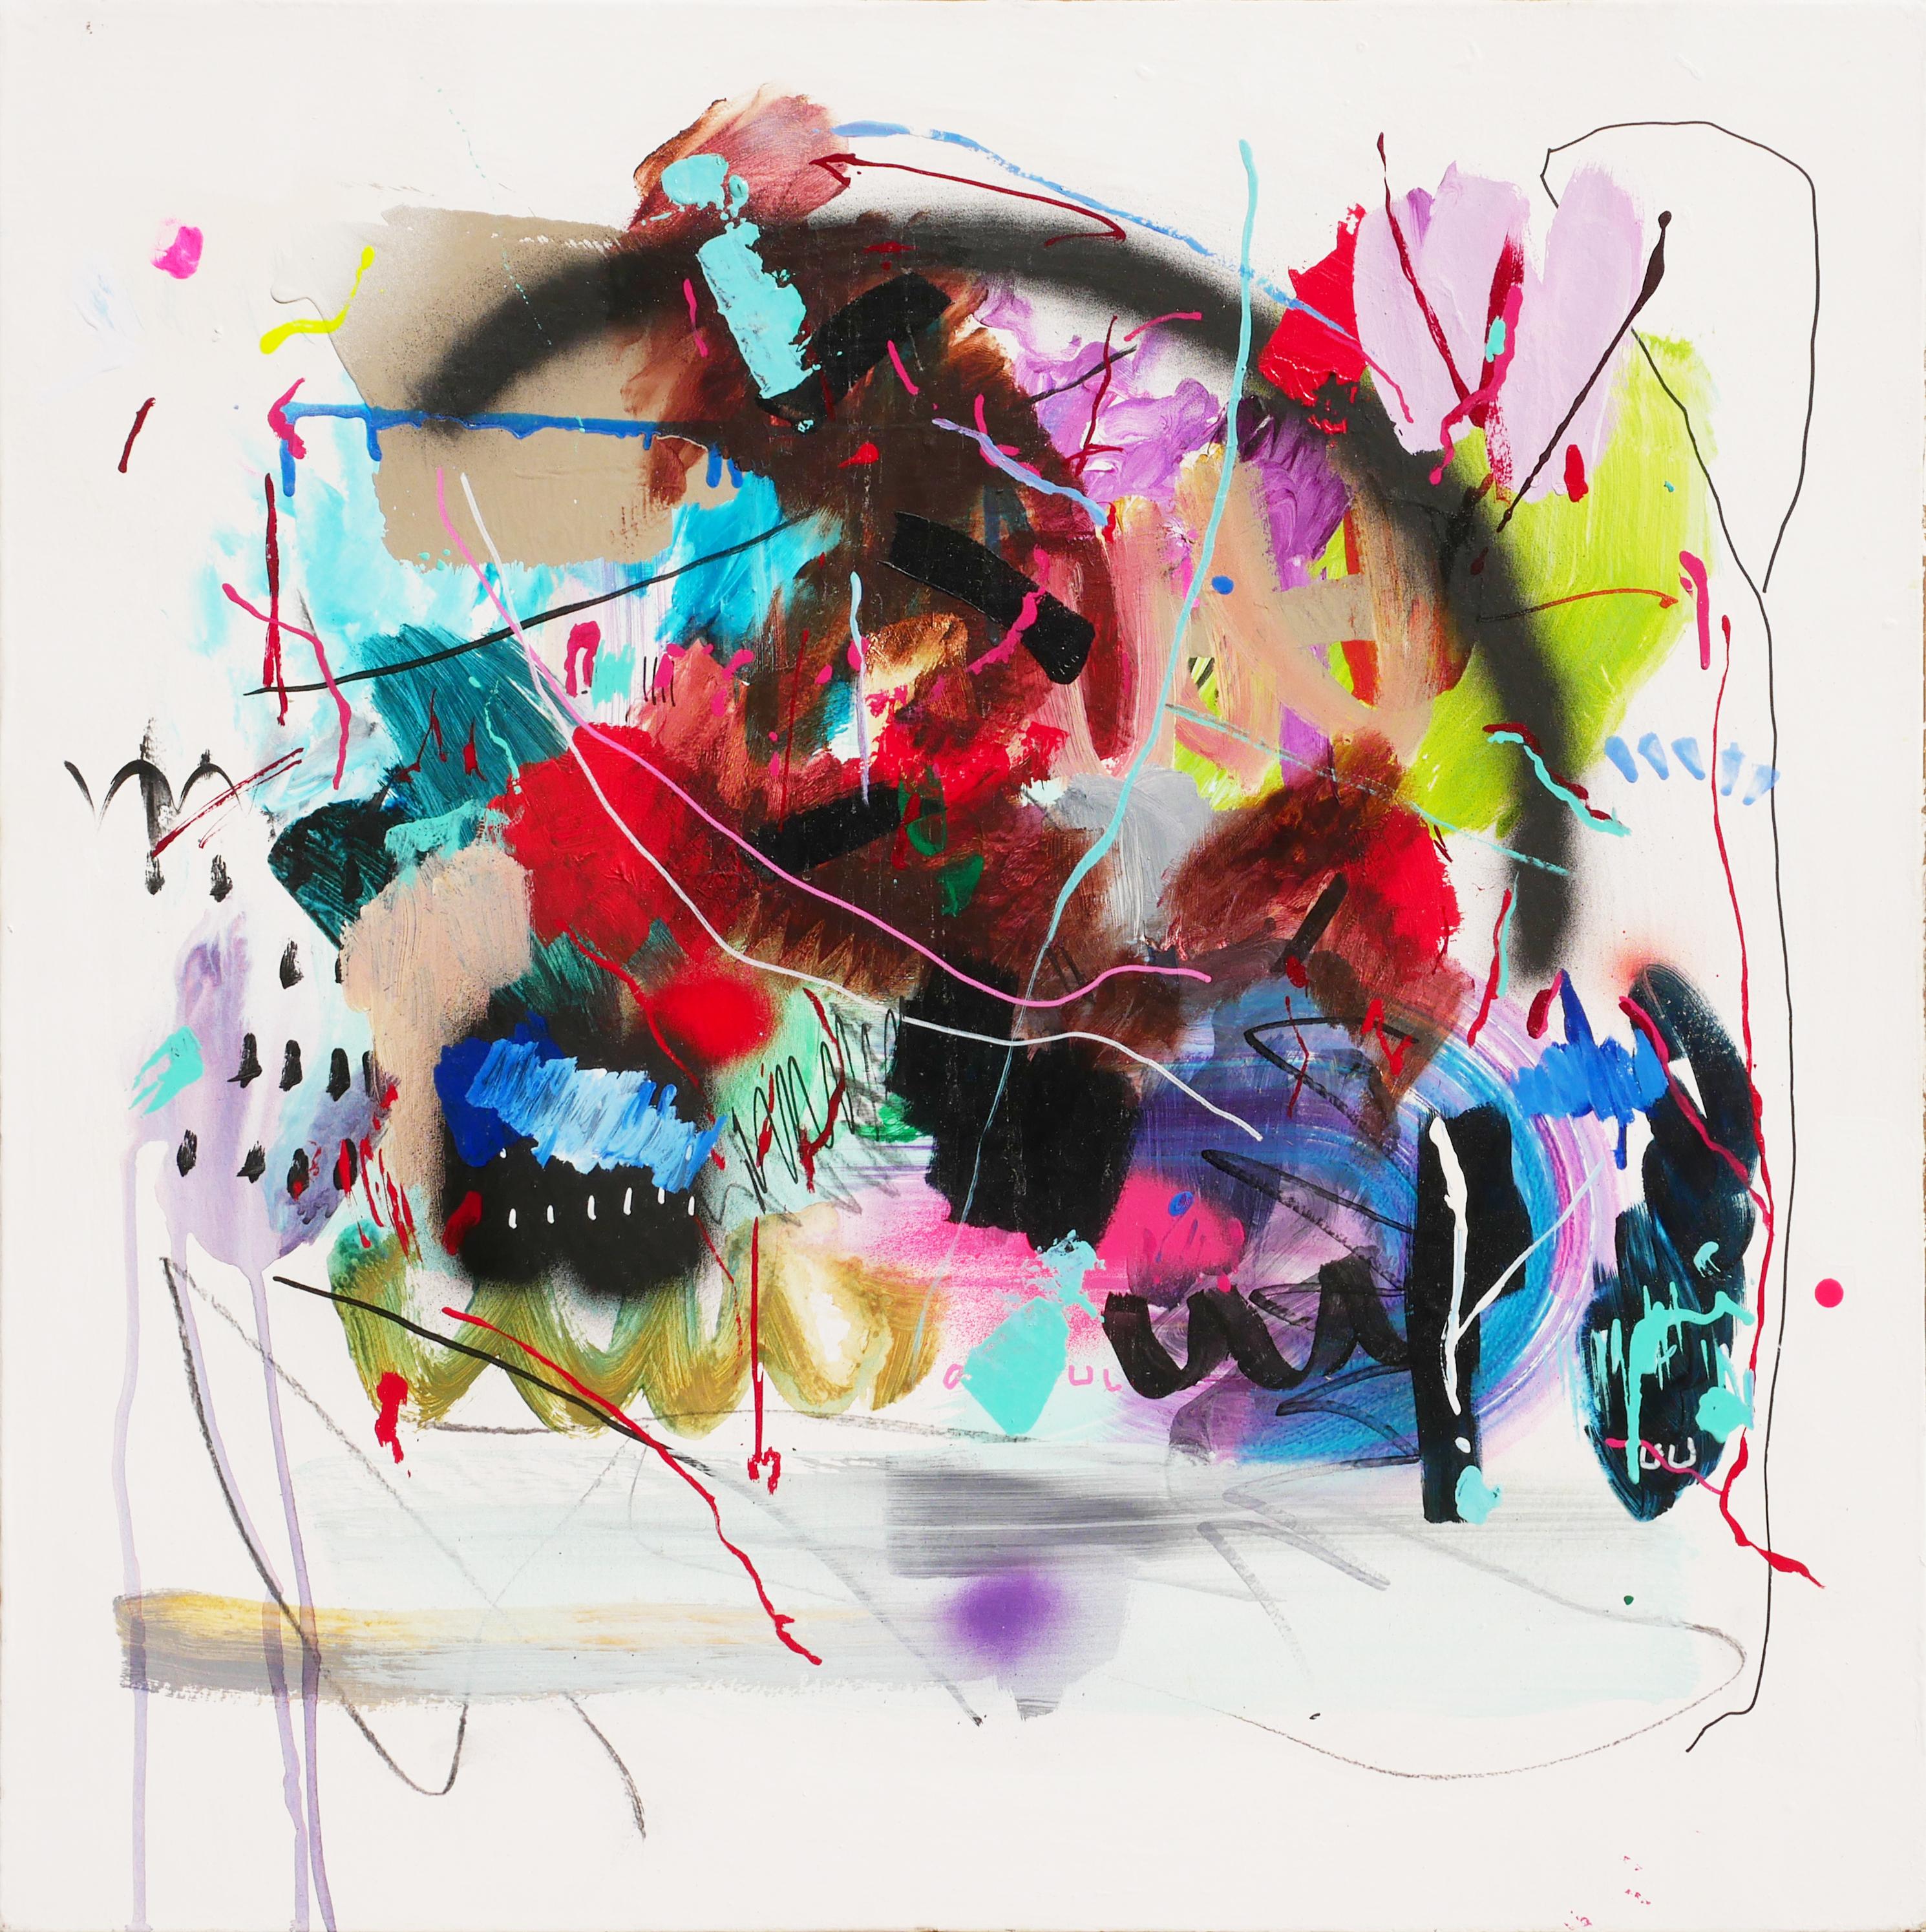 David Hardaker Abstract Painting - "Jazz Study Volume Three" Colorful Abstract Mixed Media Painting